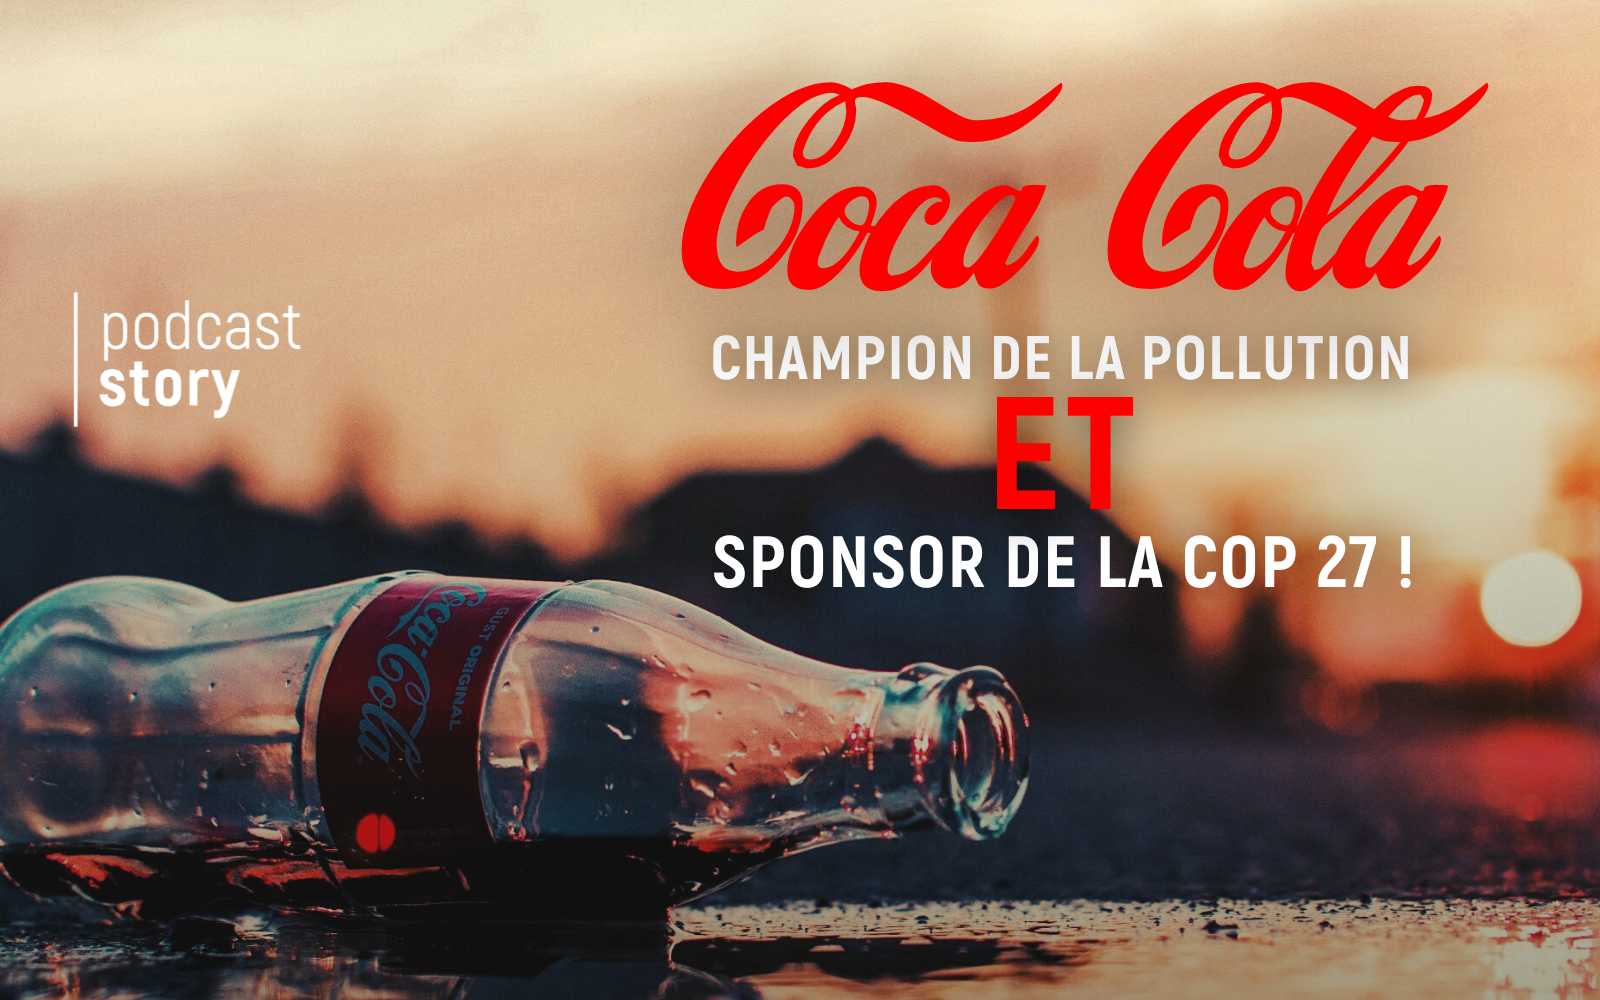 COCA-COLA – Champion de la pollution et sponsor de la COP 27 !